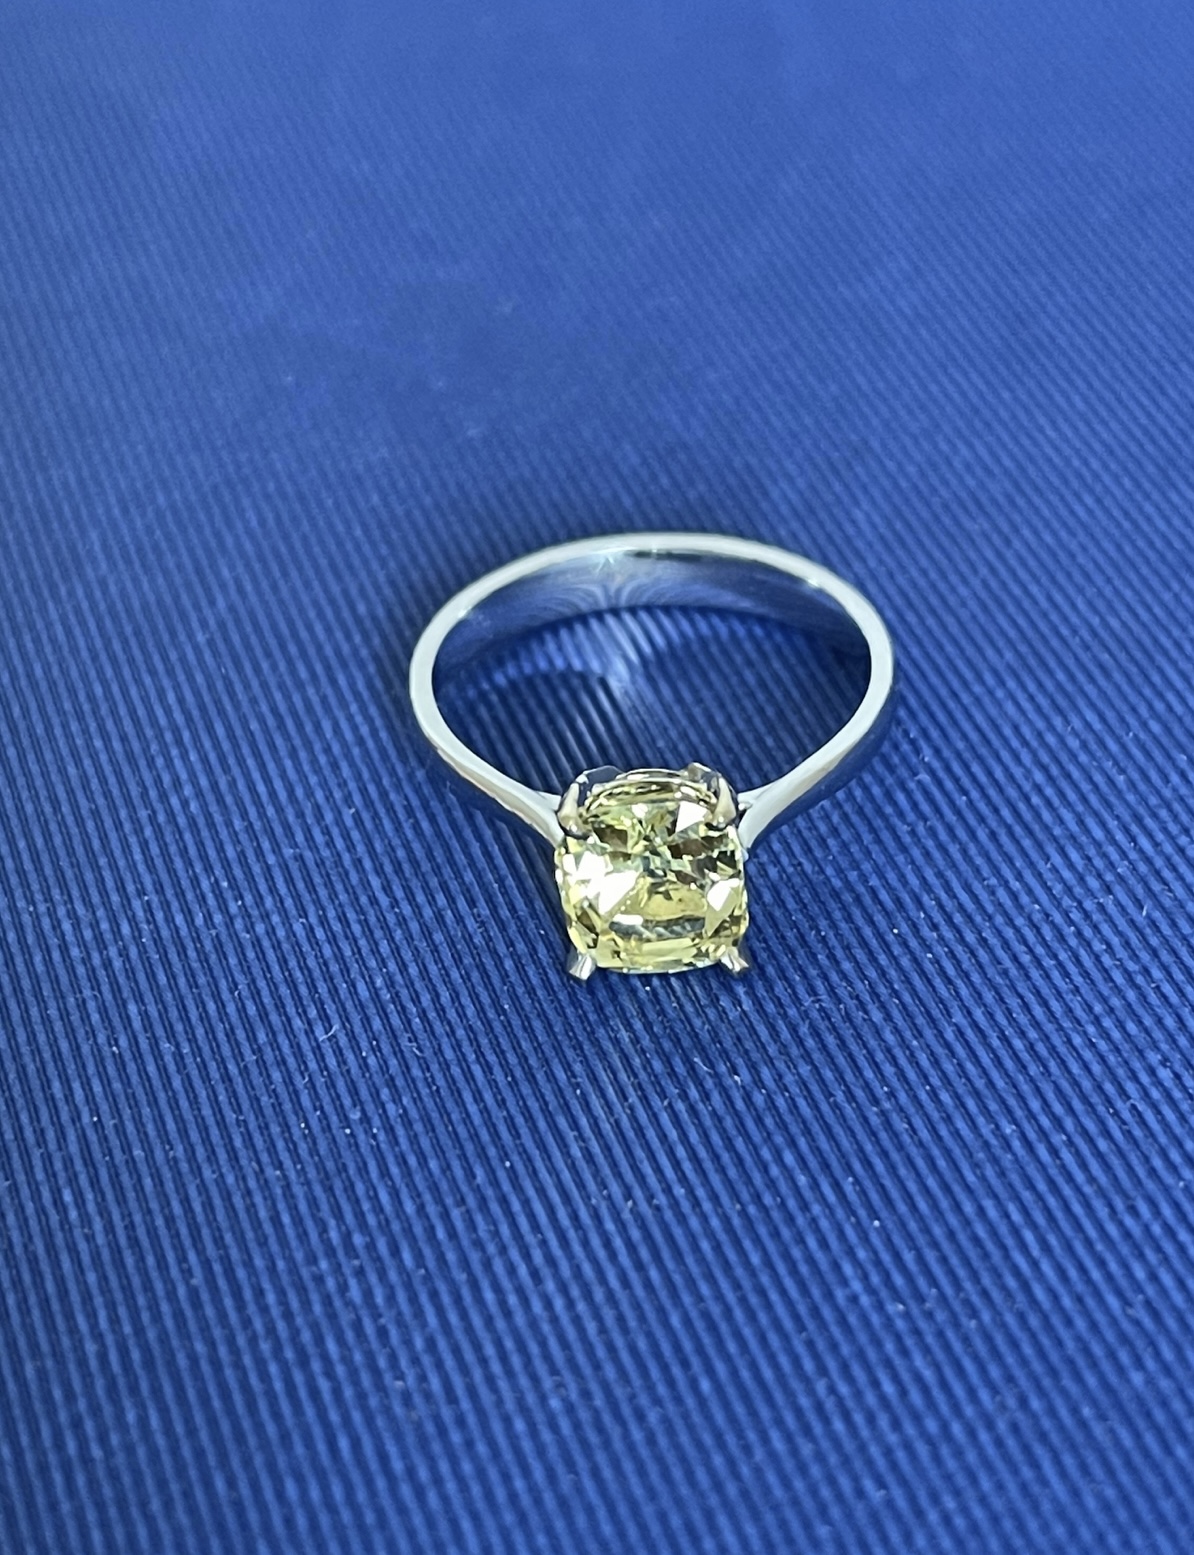 Кольцо с жёлтым бриллиантом(0,51 ct.) из платины 950 пробы